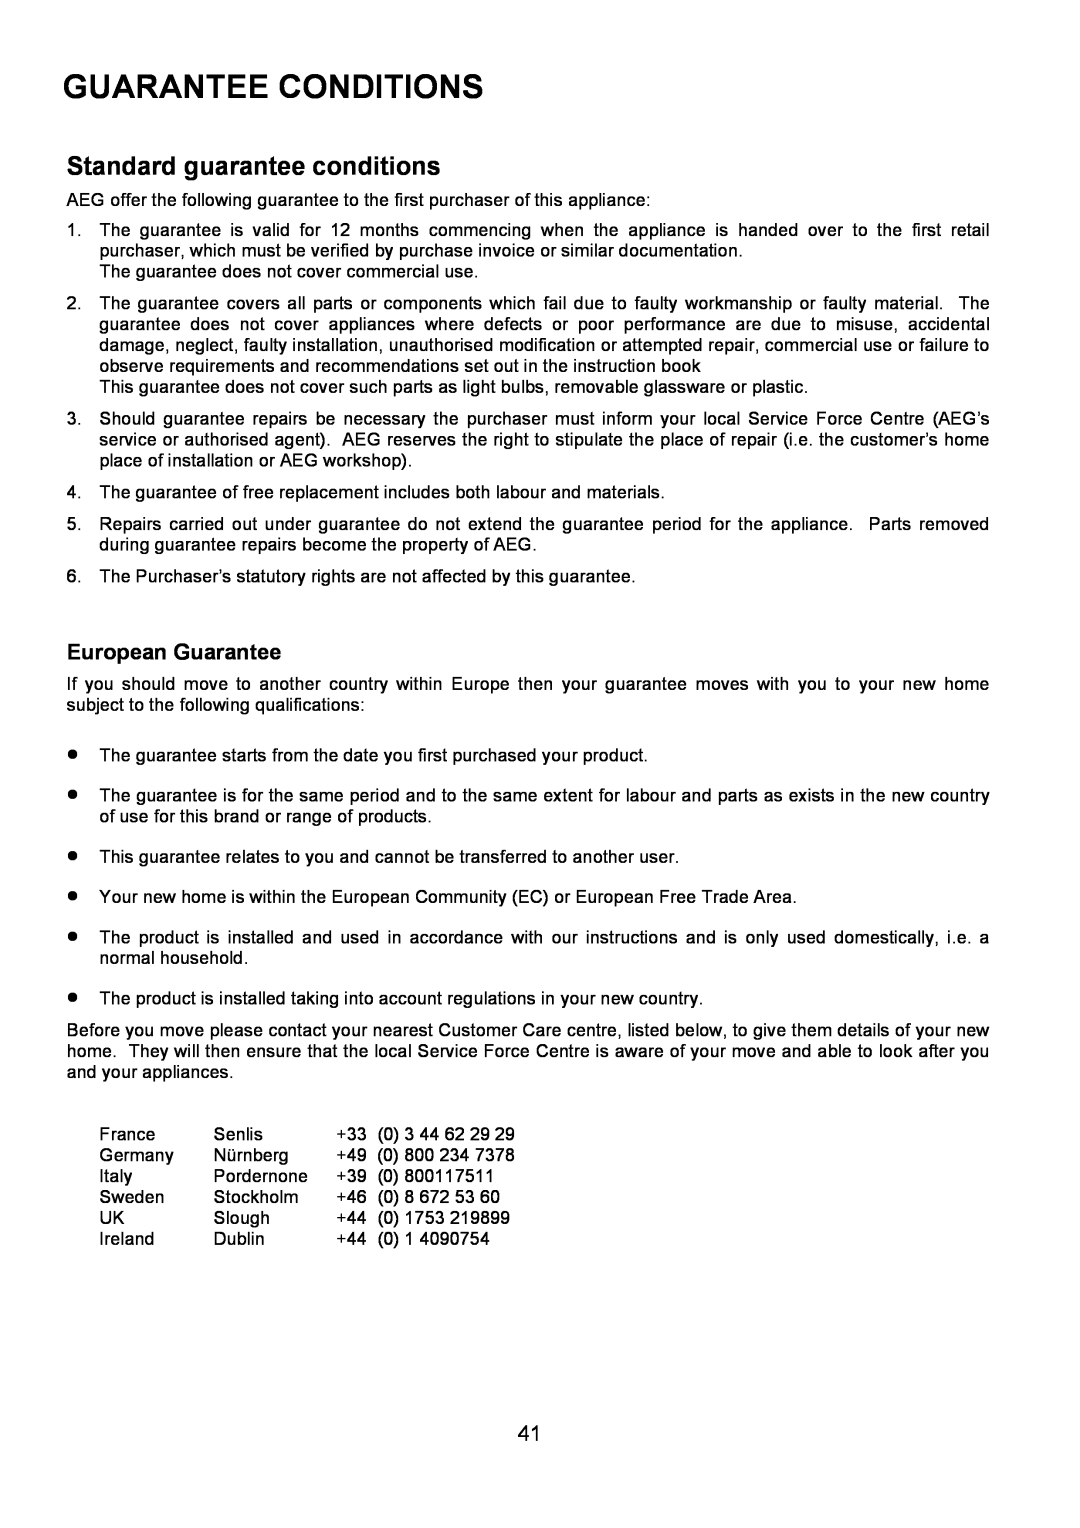 Electrolux U7101-4 operating instructions Guarantee Conditions, Standard guarantee conditions, European Guarantee 